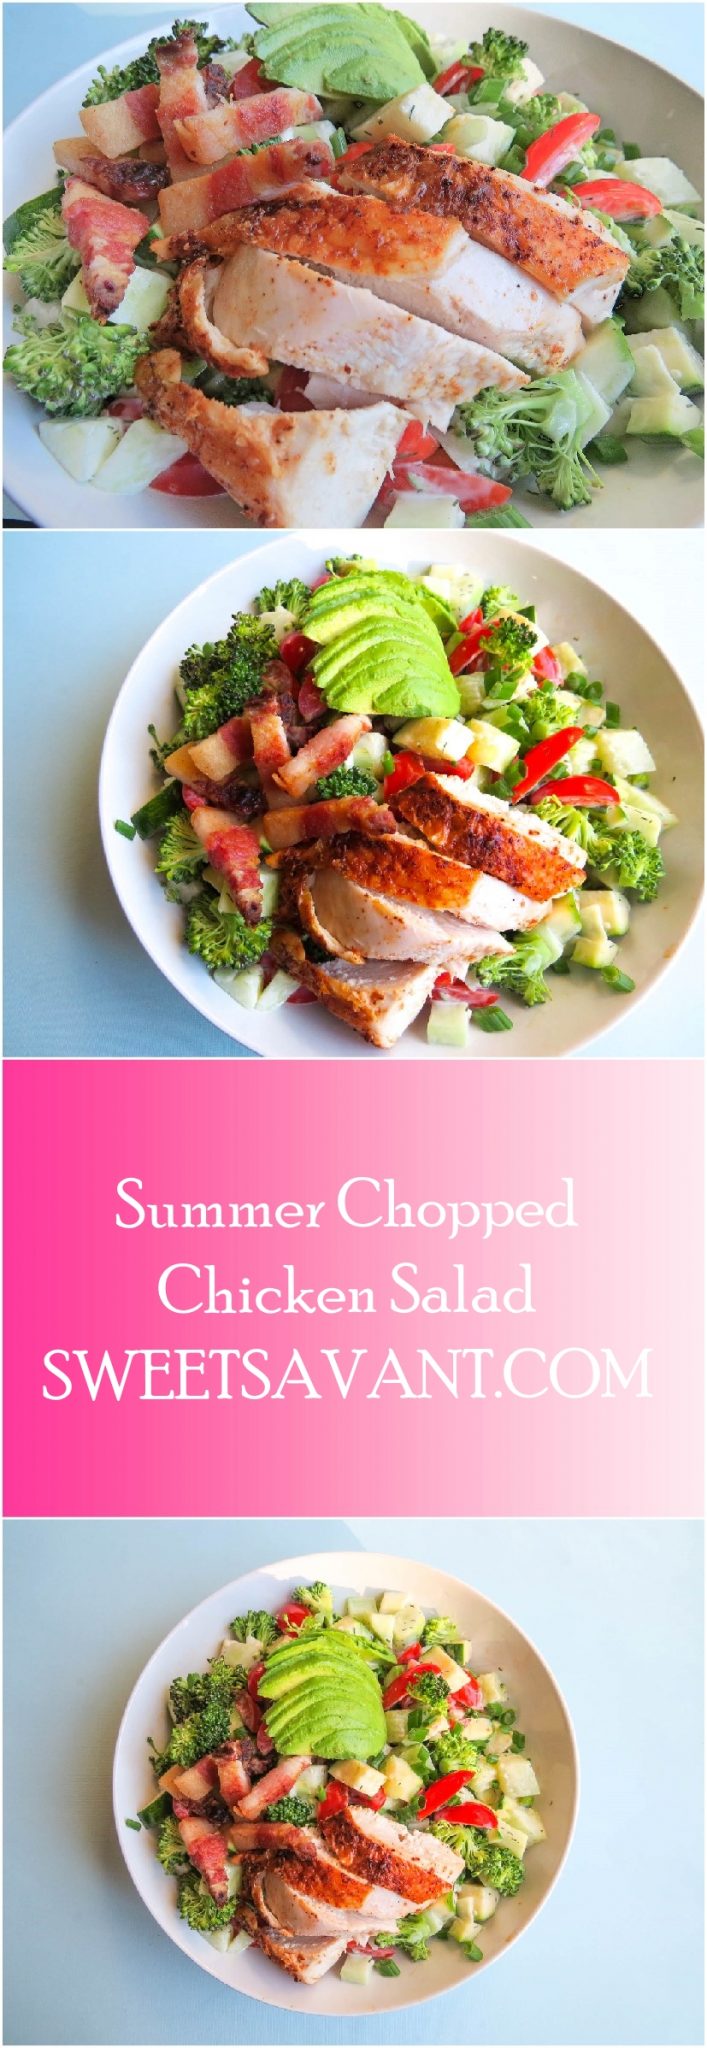 Chopped Salad Summer Chopped Chicken Salad Recipe sweetsavant.com America's best food blog roast chicken recipe